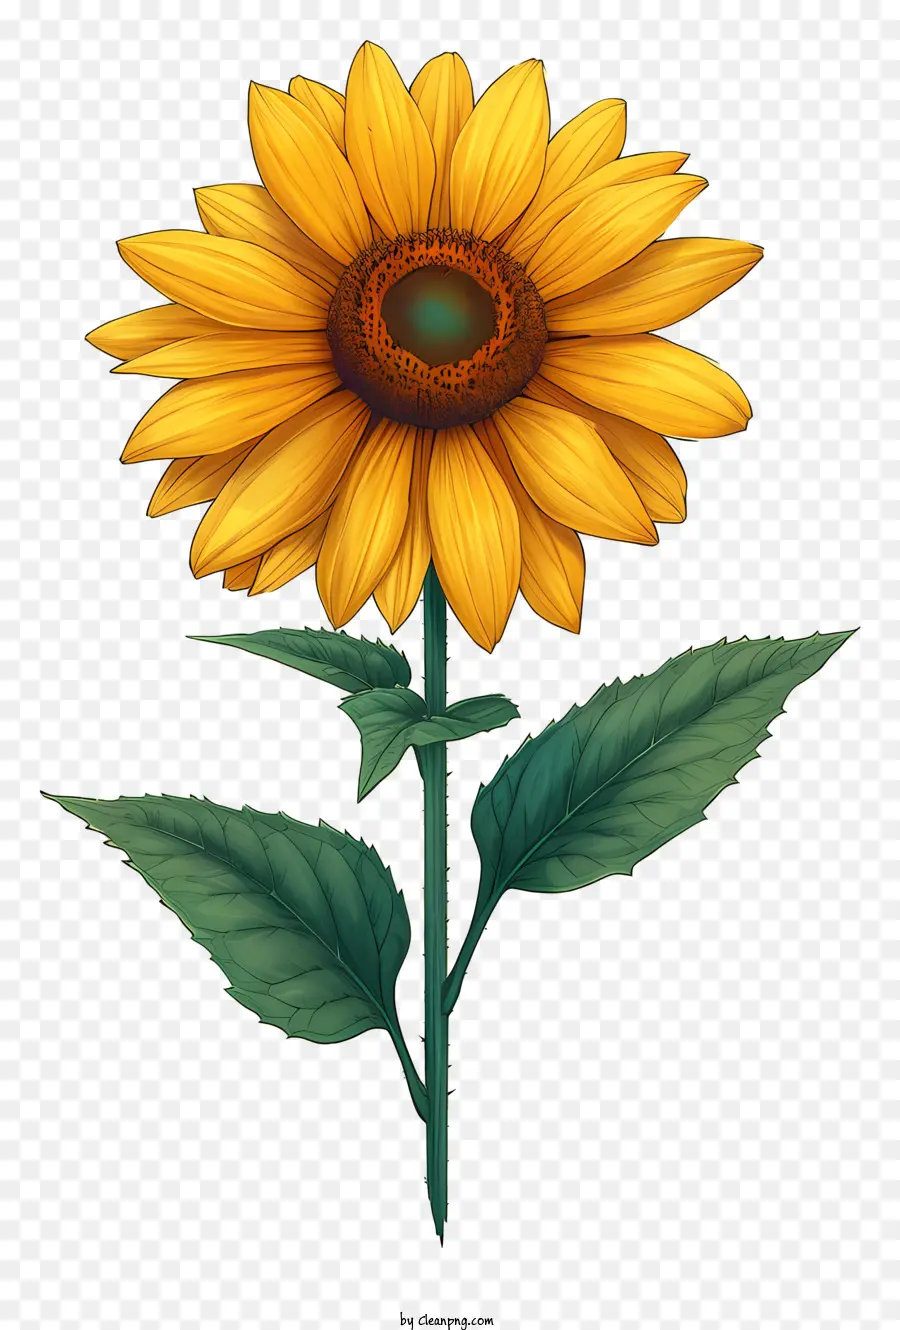 Sonnenblume - Lebendige Sonnenblume mit öffnungsgelbem Blütenblatt